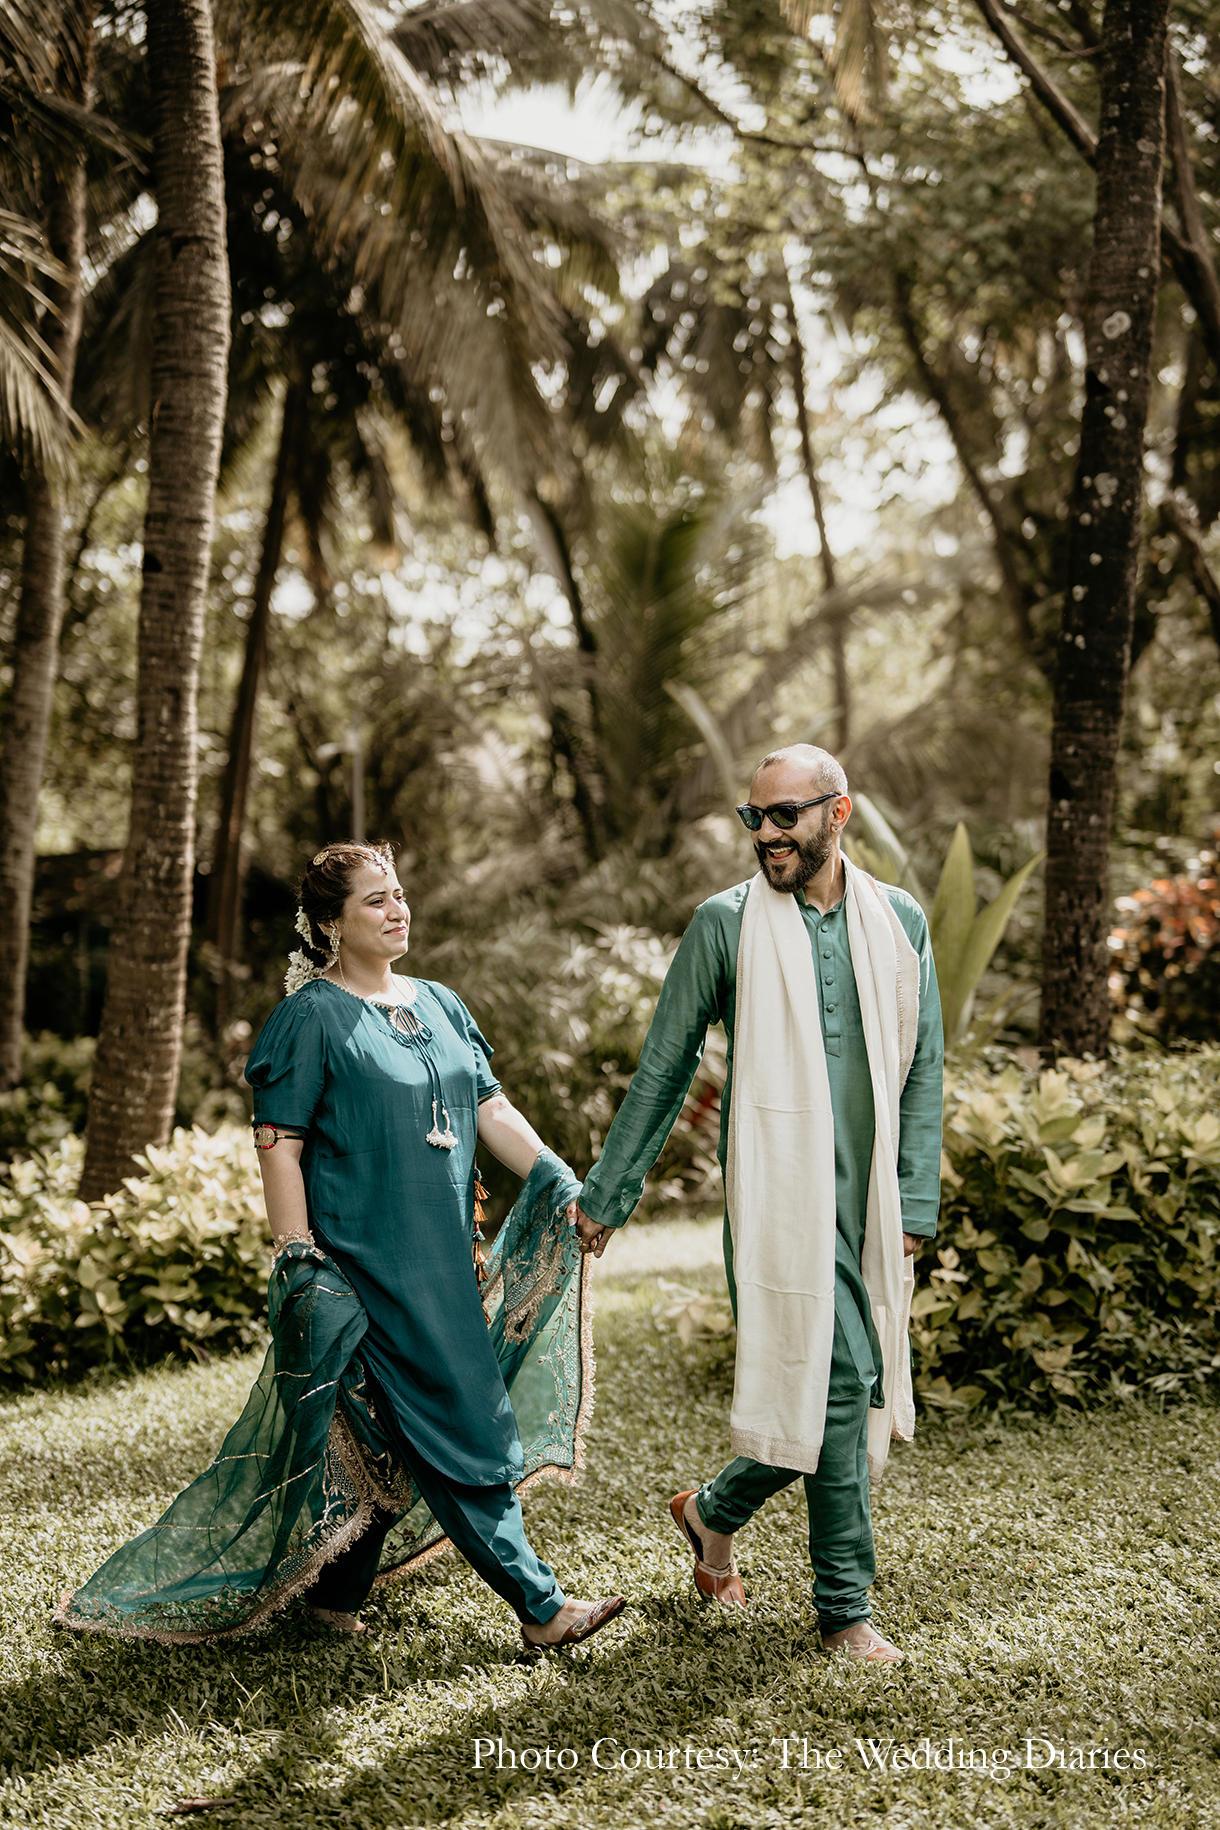 Akanksha Sethi and Shiladitya Nath, Goa